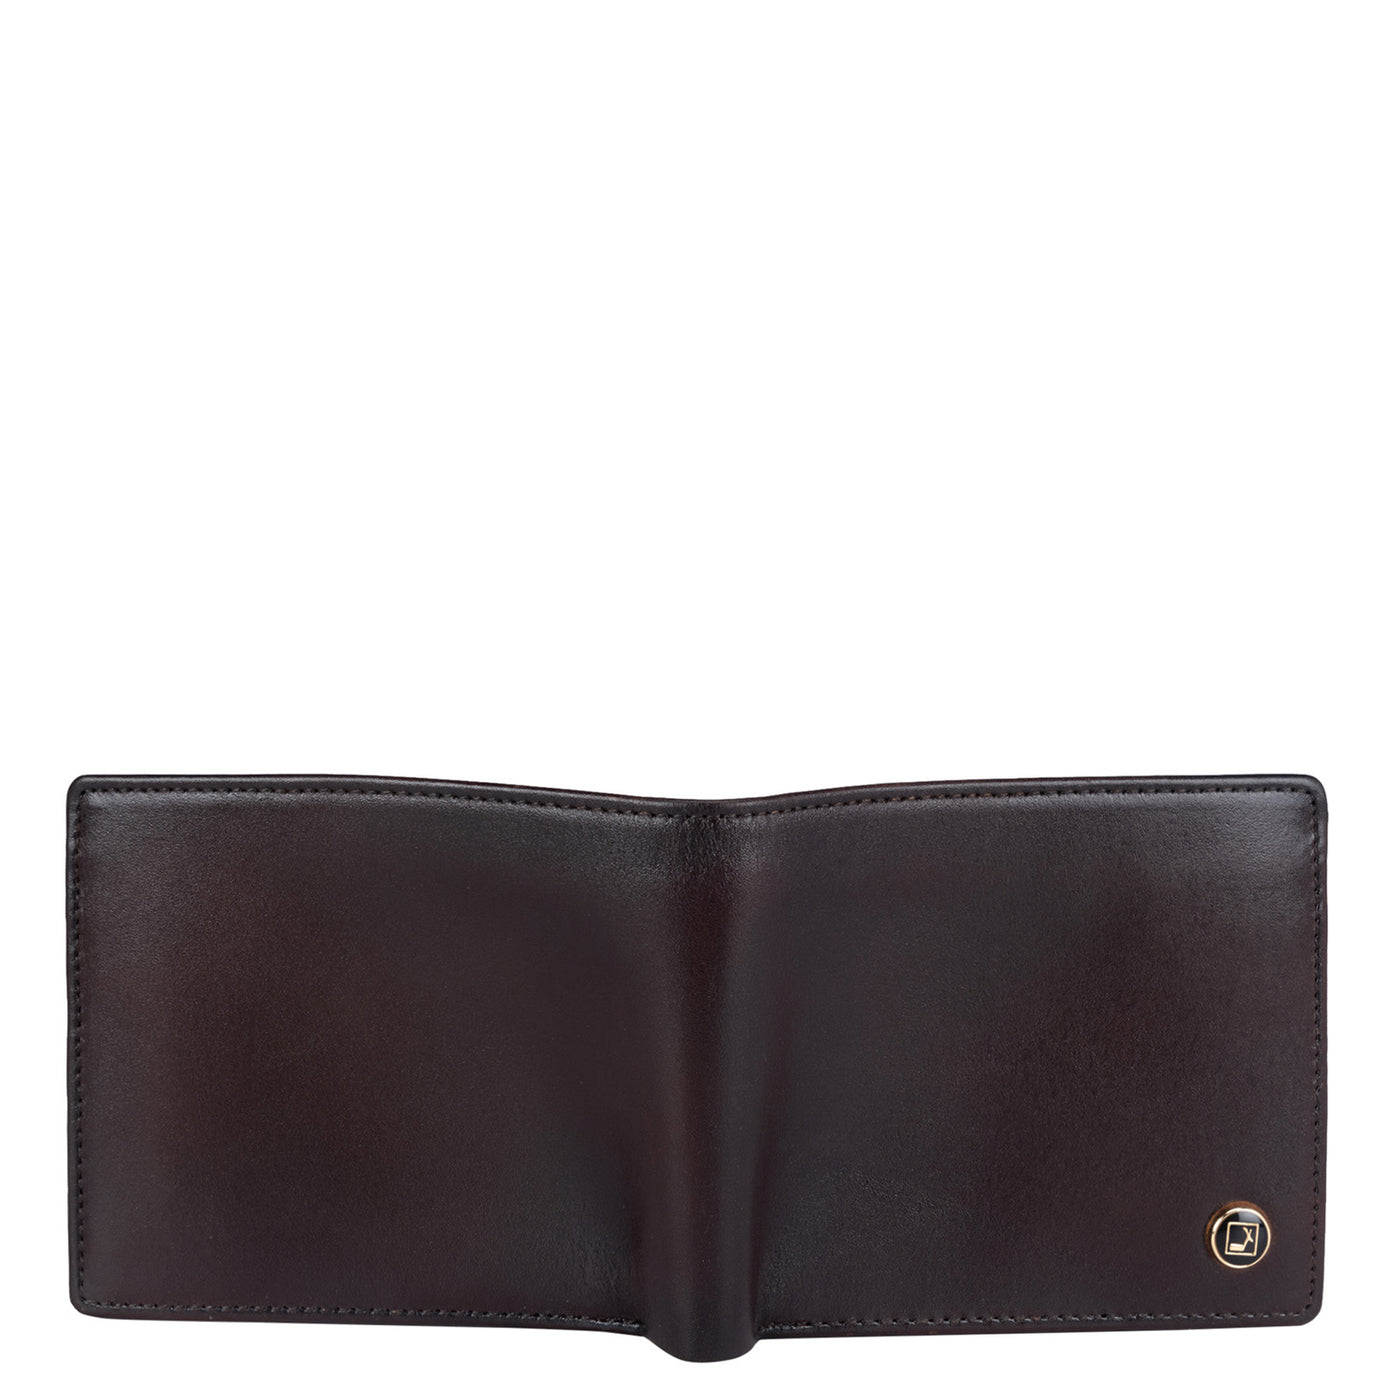 Plain Leather Mens Wallet - Brown